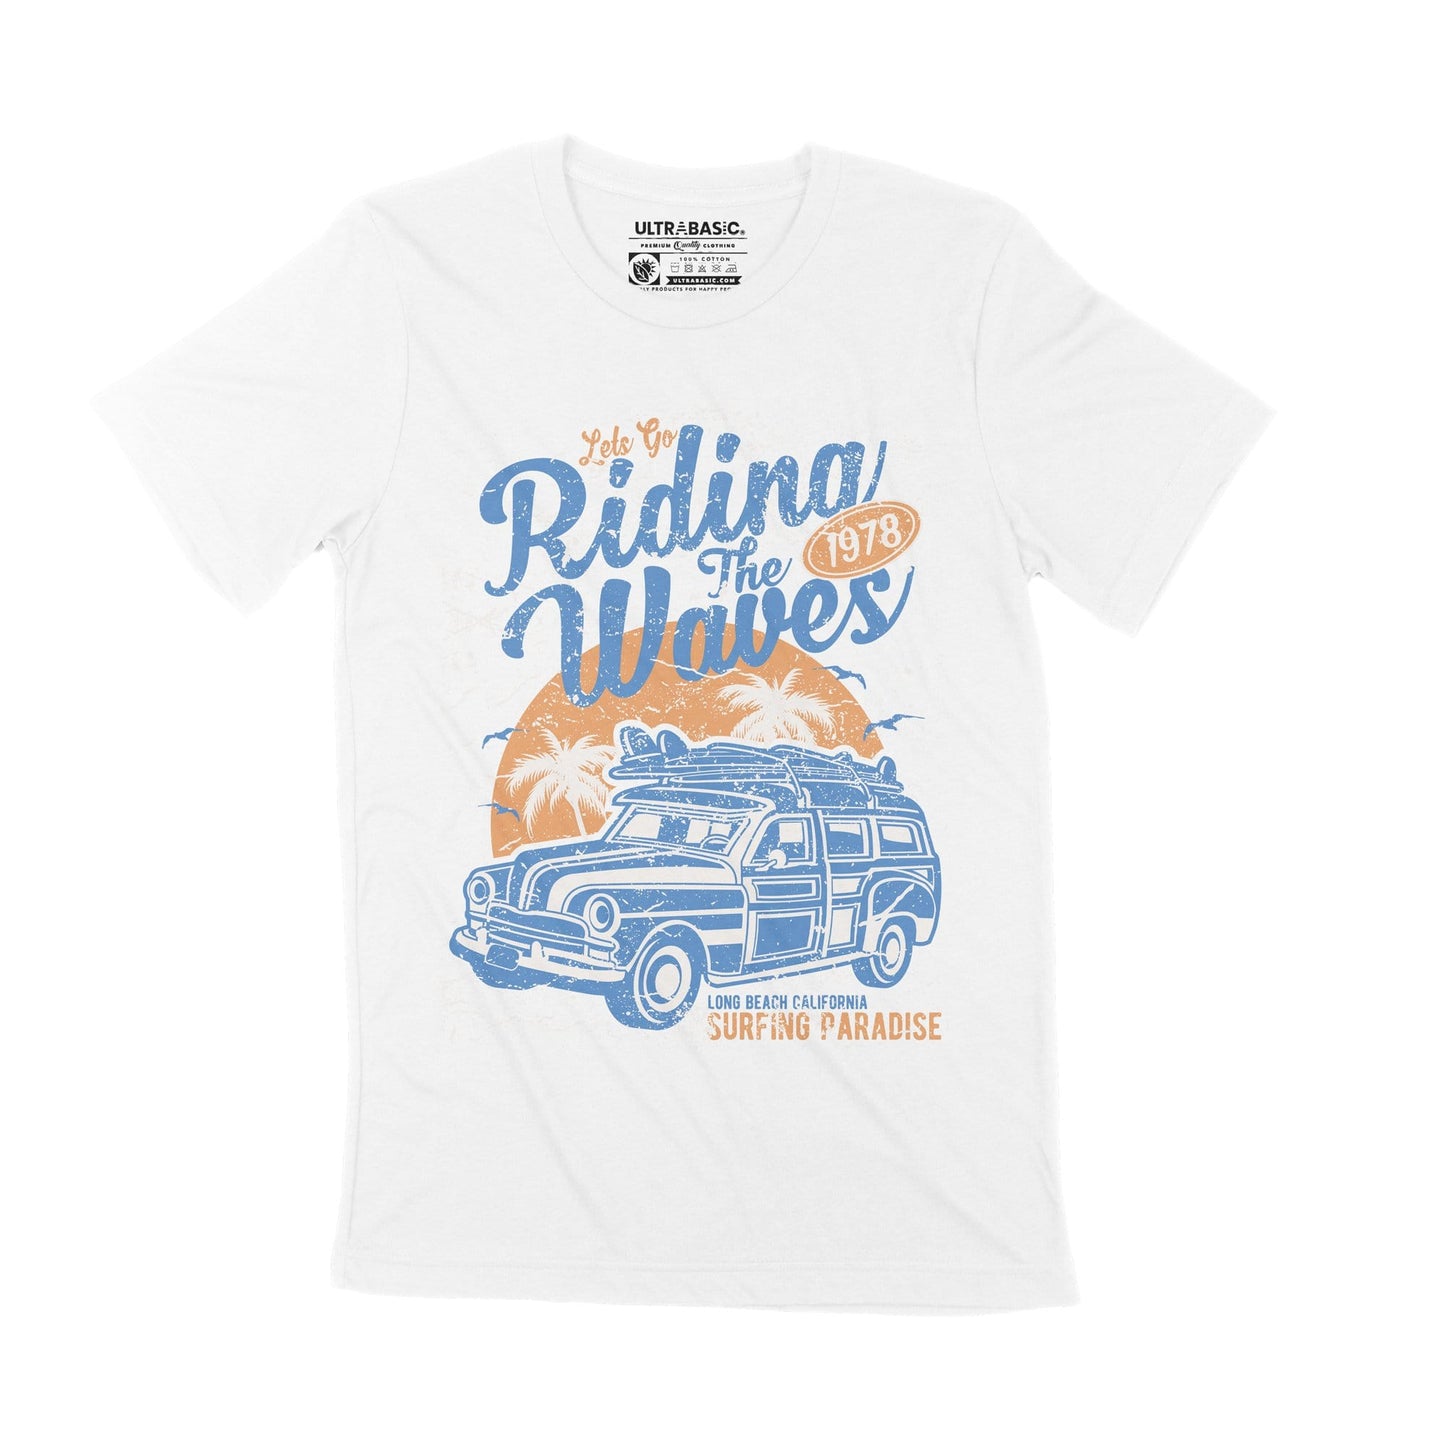 ULTRABASIC Herren T-Shirt Lets Go Riding Waves 1978 – Surf-T-Shirt für Surfer